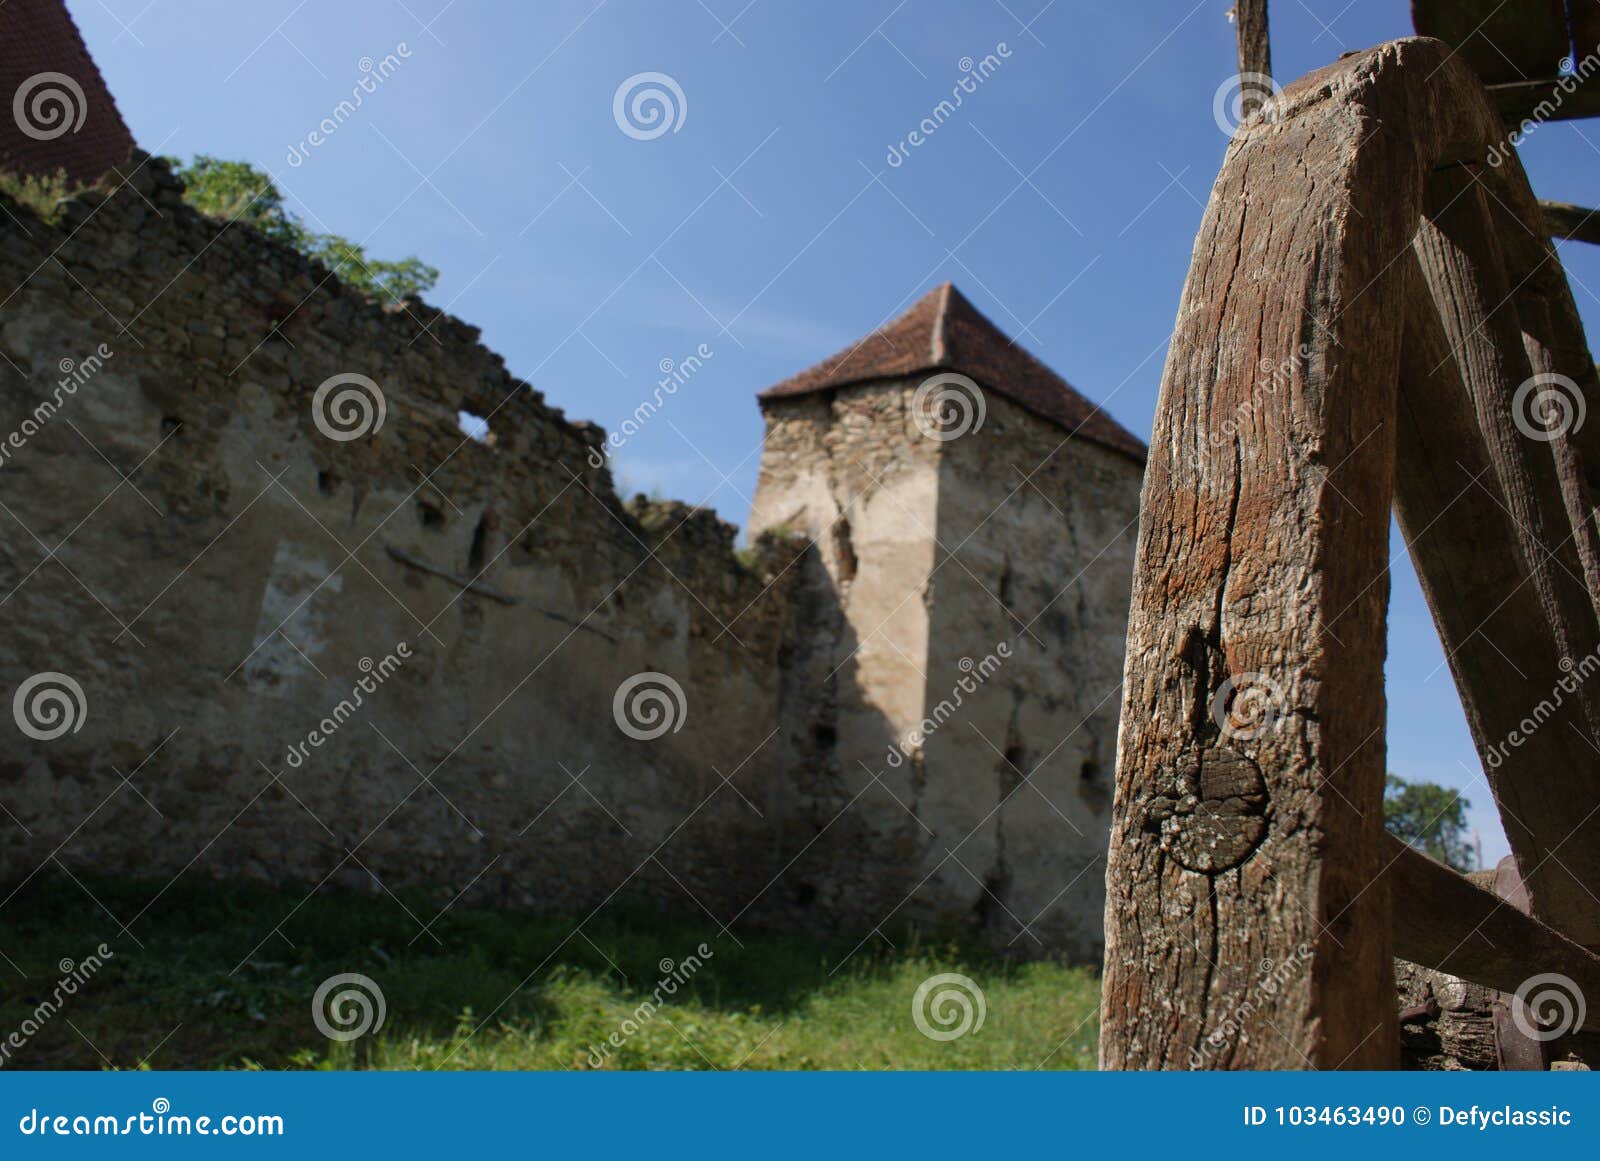 arcus fortress church in transylvania